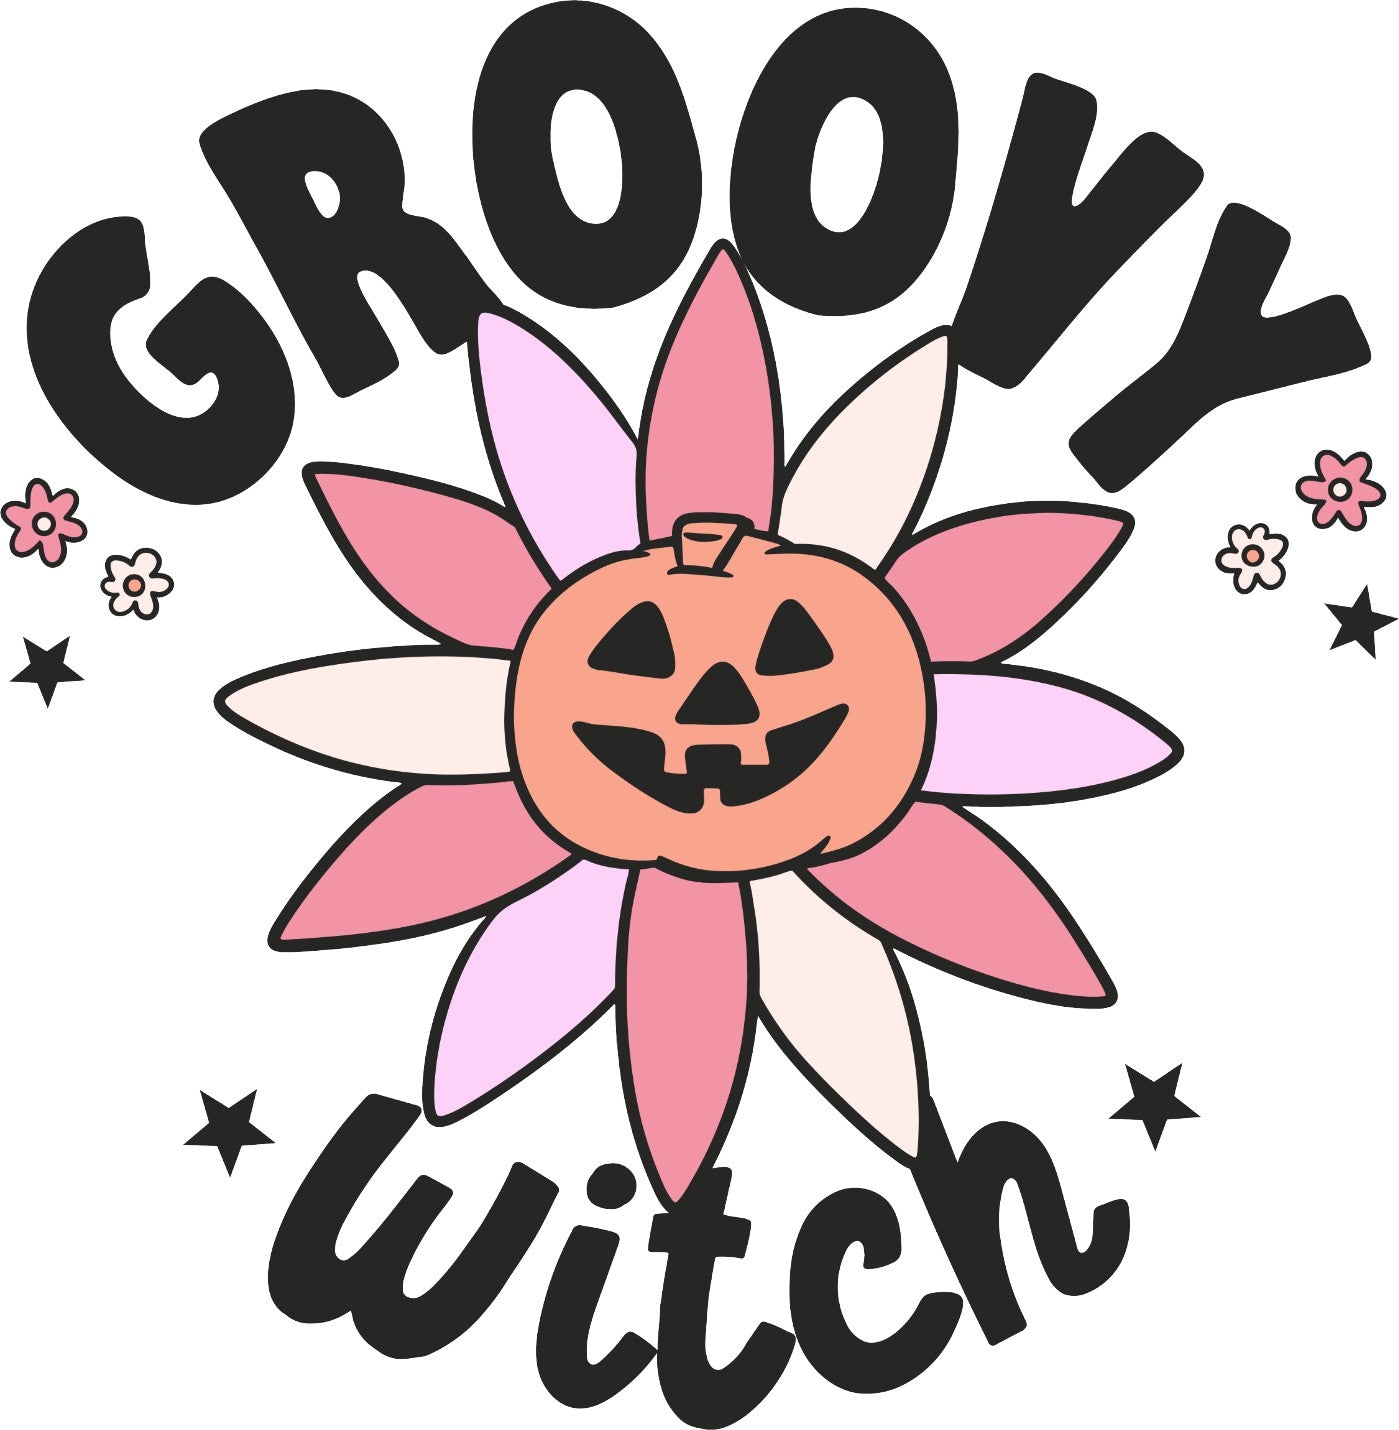 HTV Prints - Groovy Witch - The Vinyl Haus